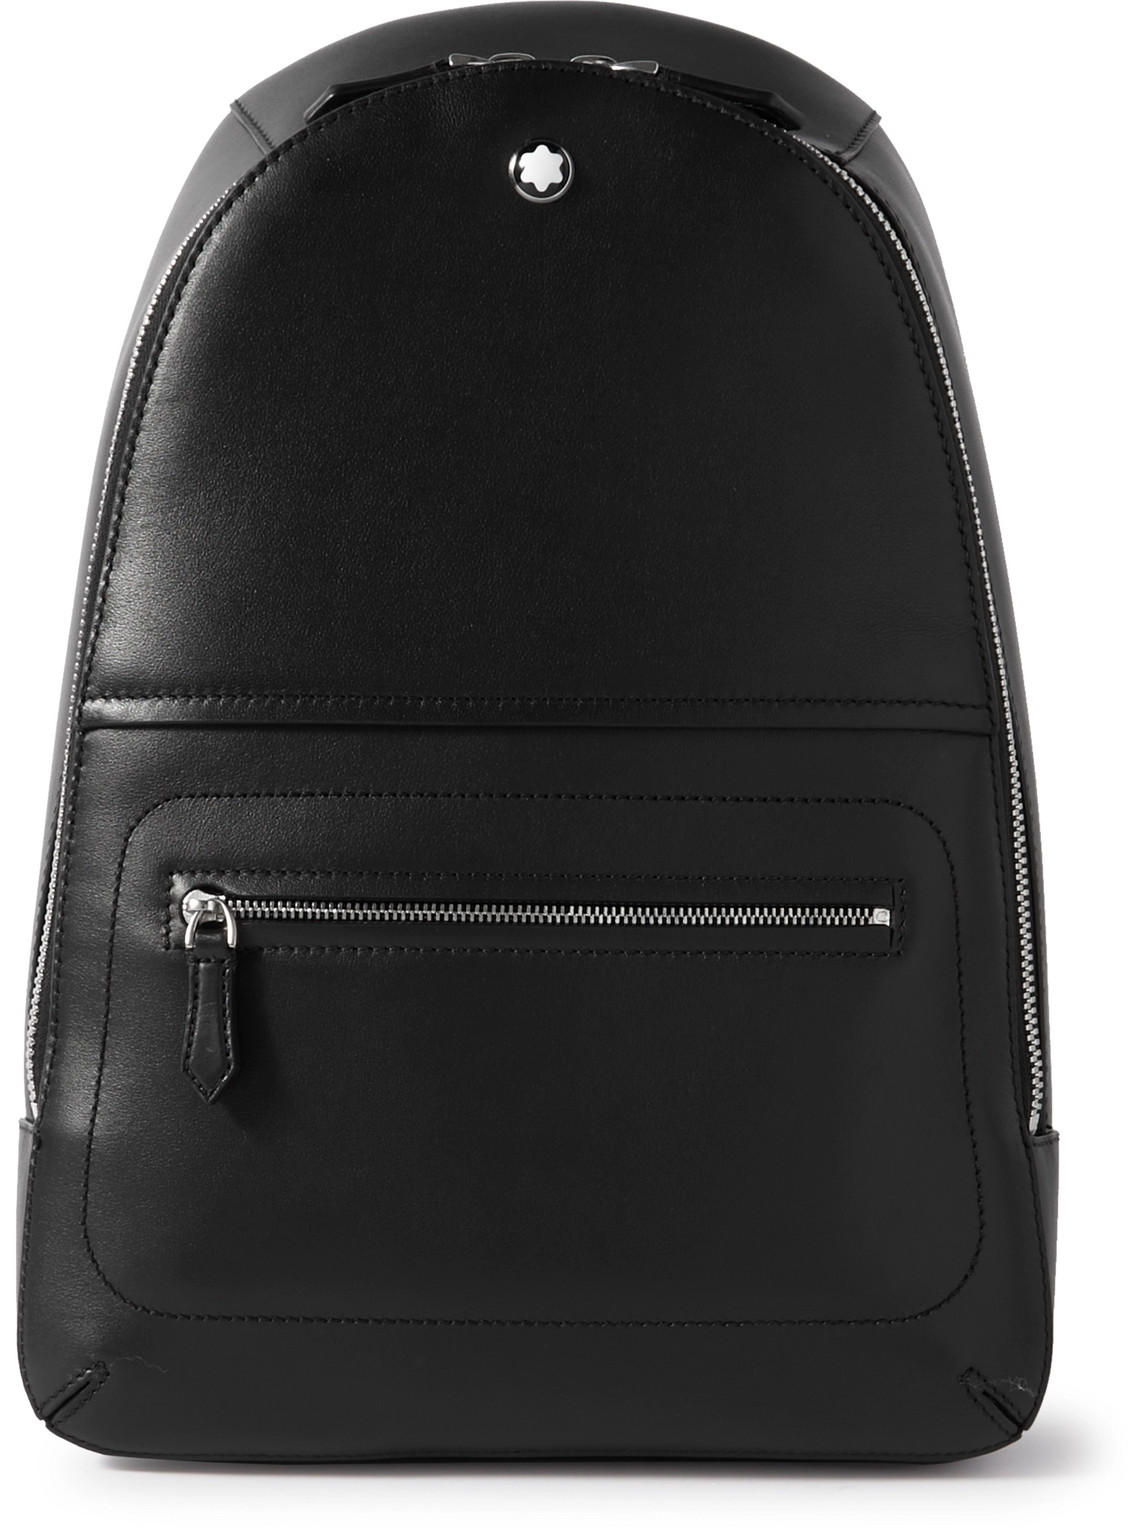 Montblanc Meisterstuck Soft Grain Leather Medium Backpack In Black